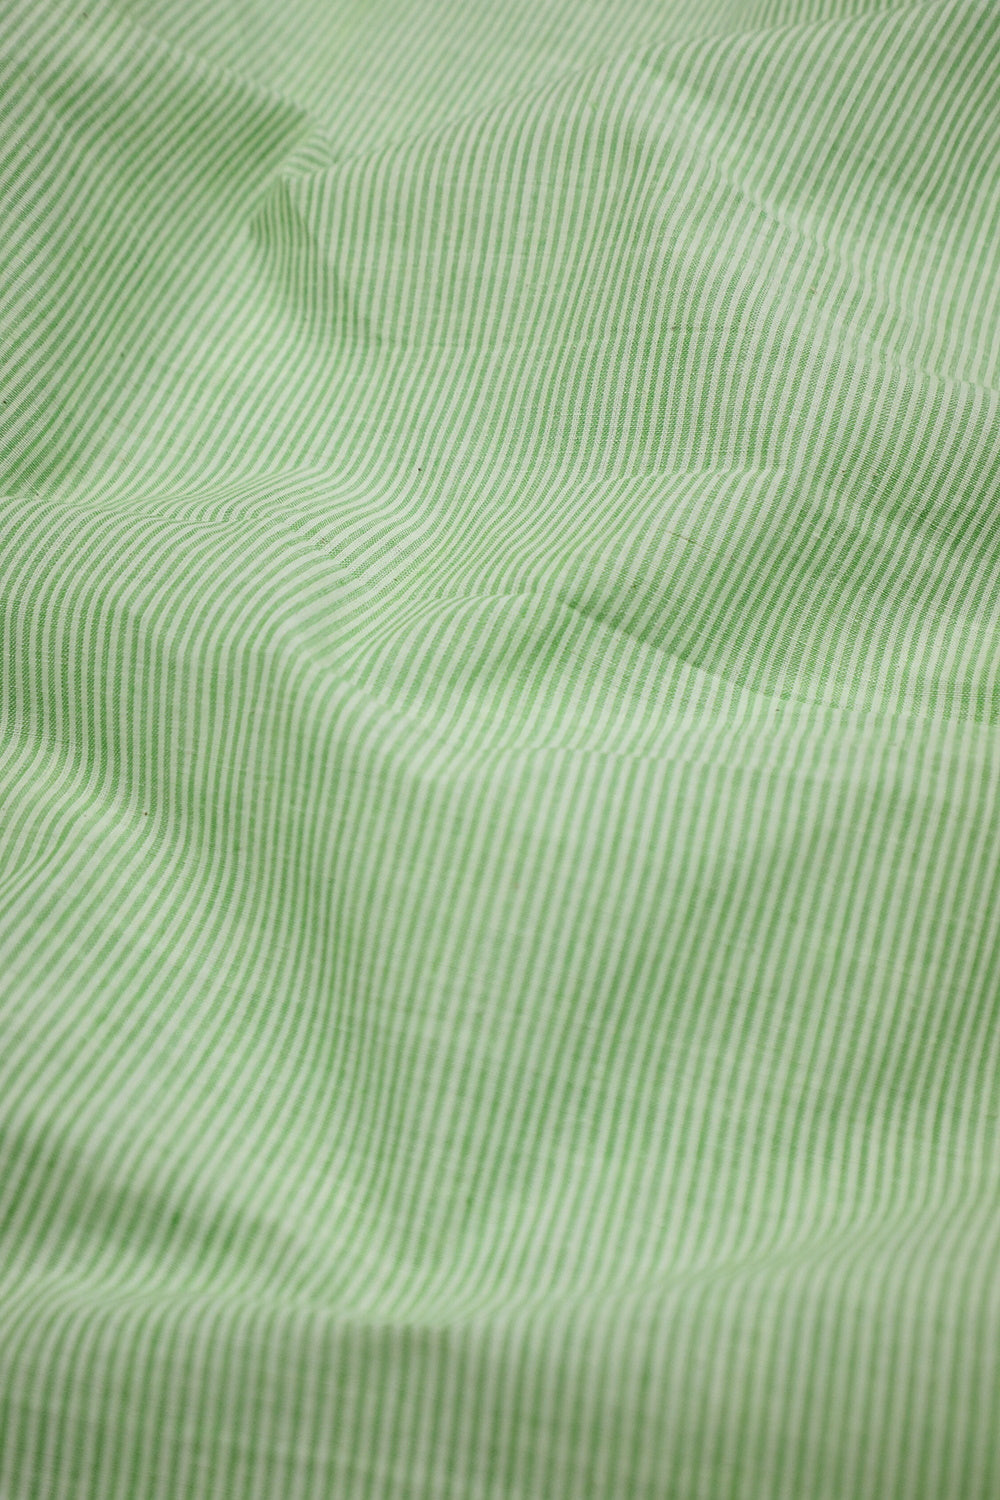 Pin Stripes of Green & White Mangalagiri Cotton Fabric